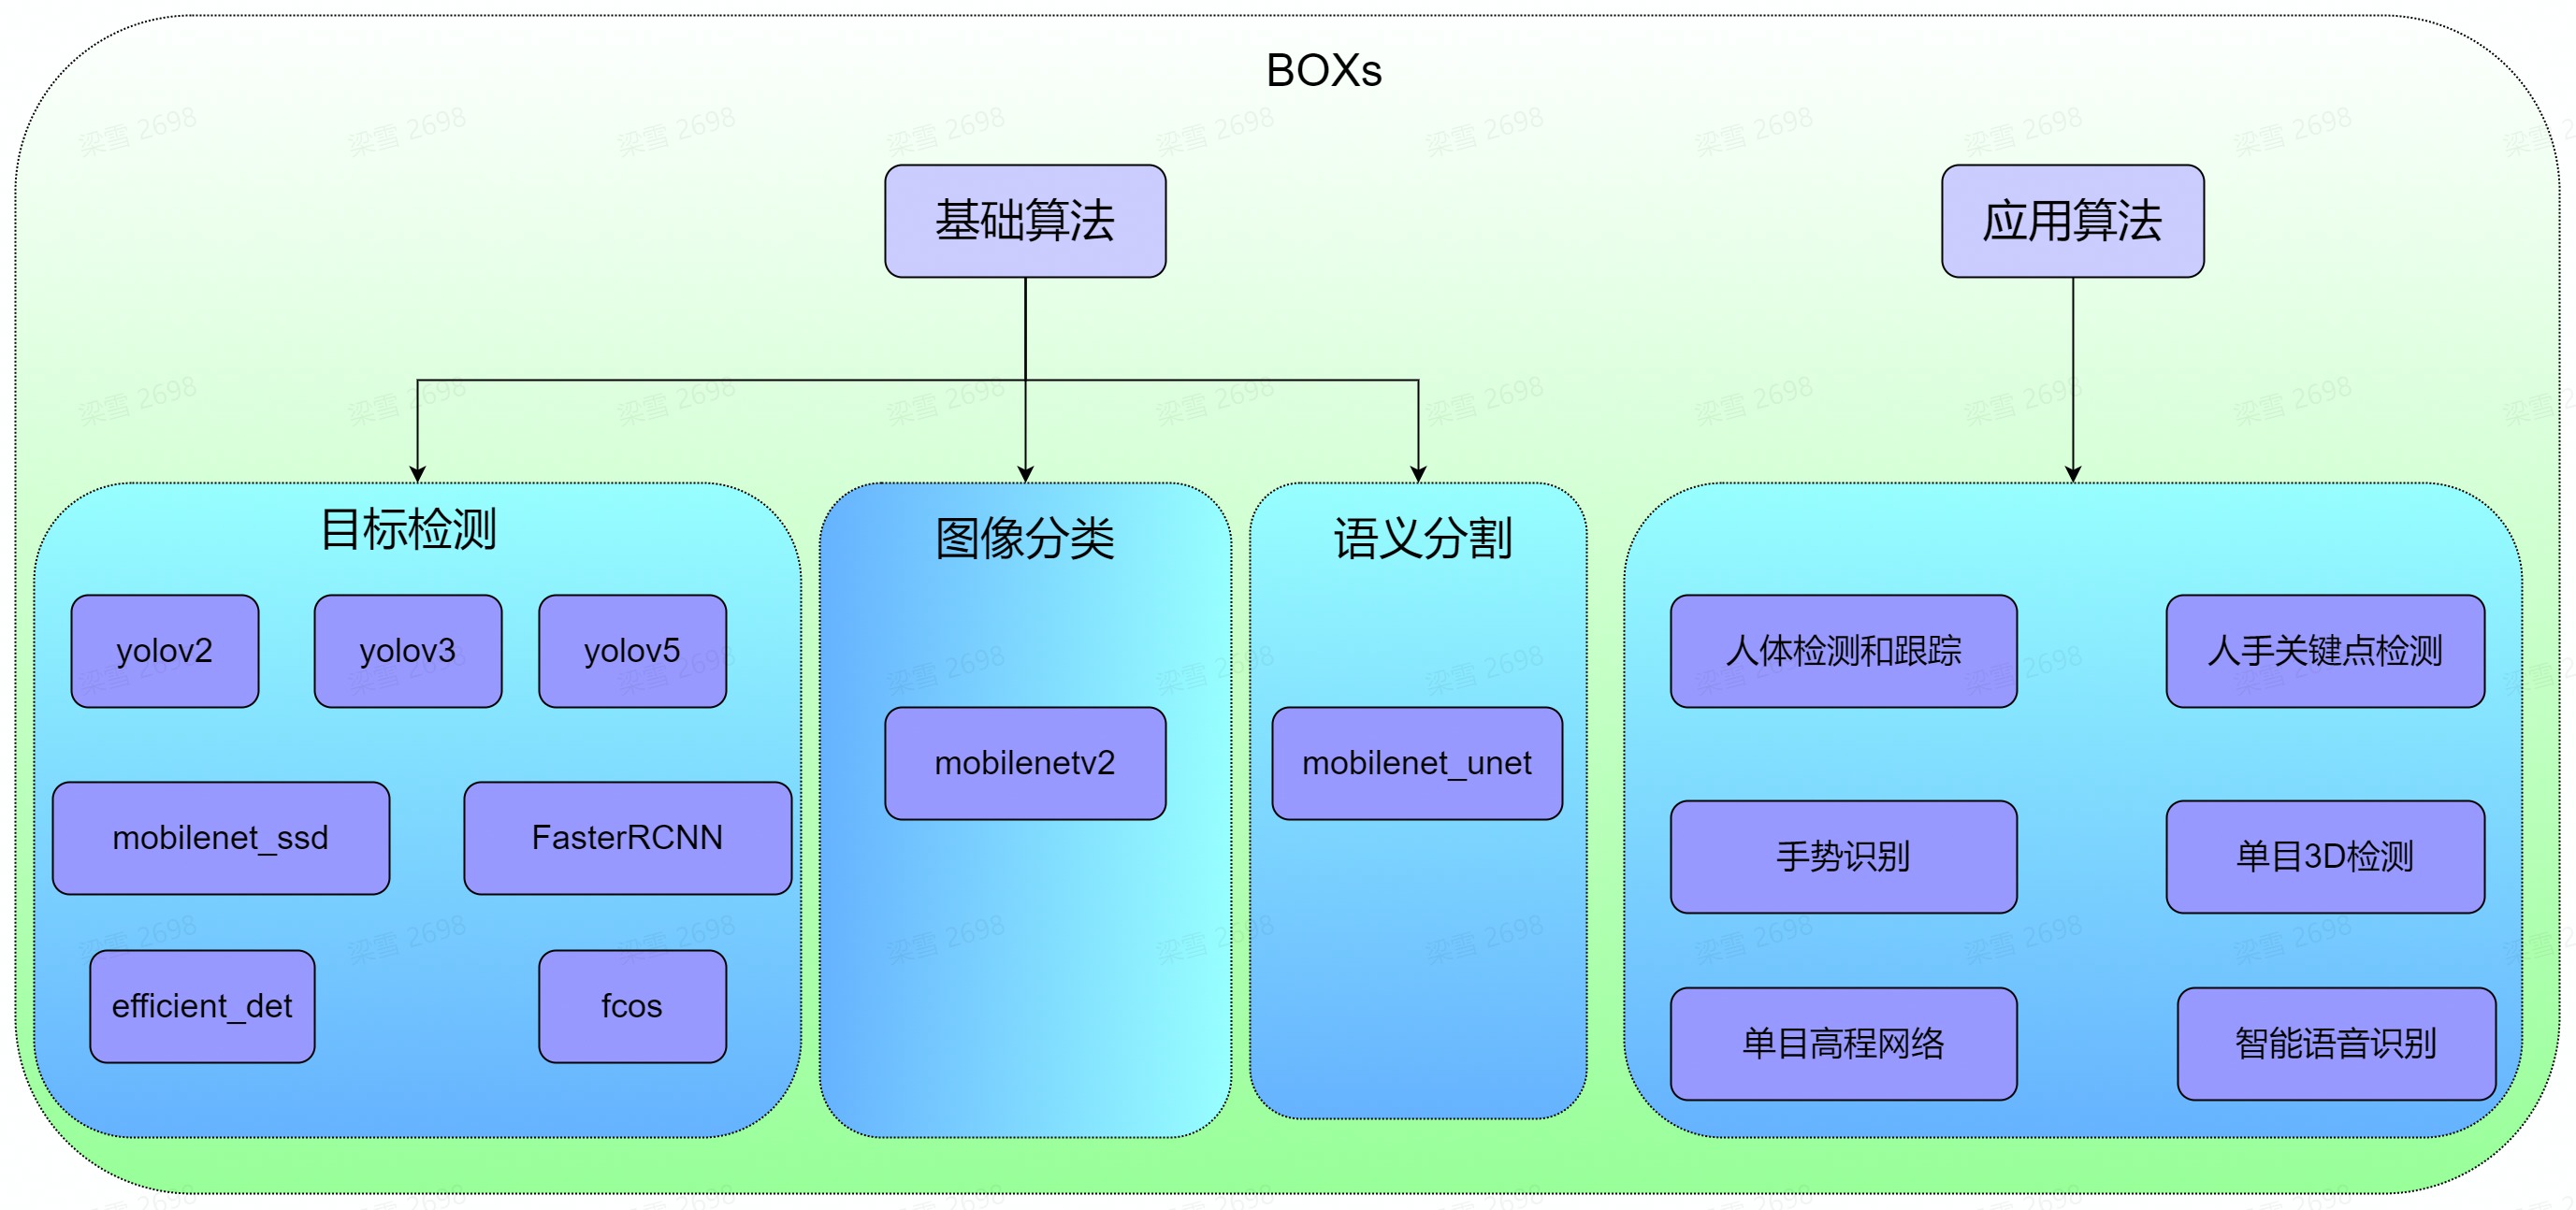 box_introduction